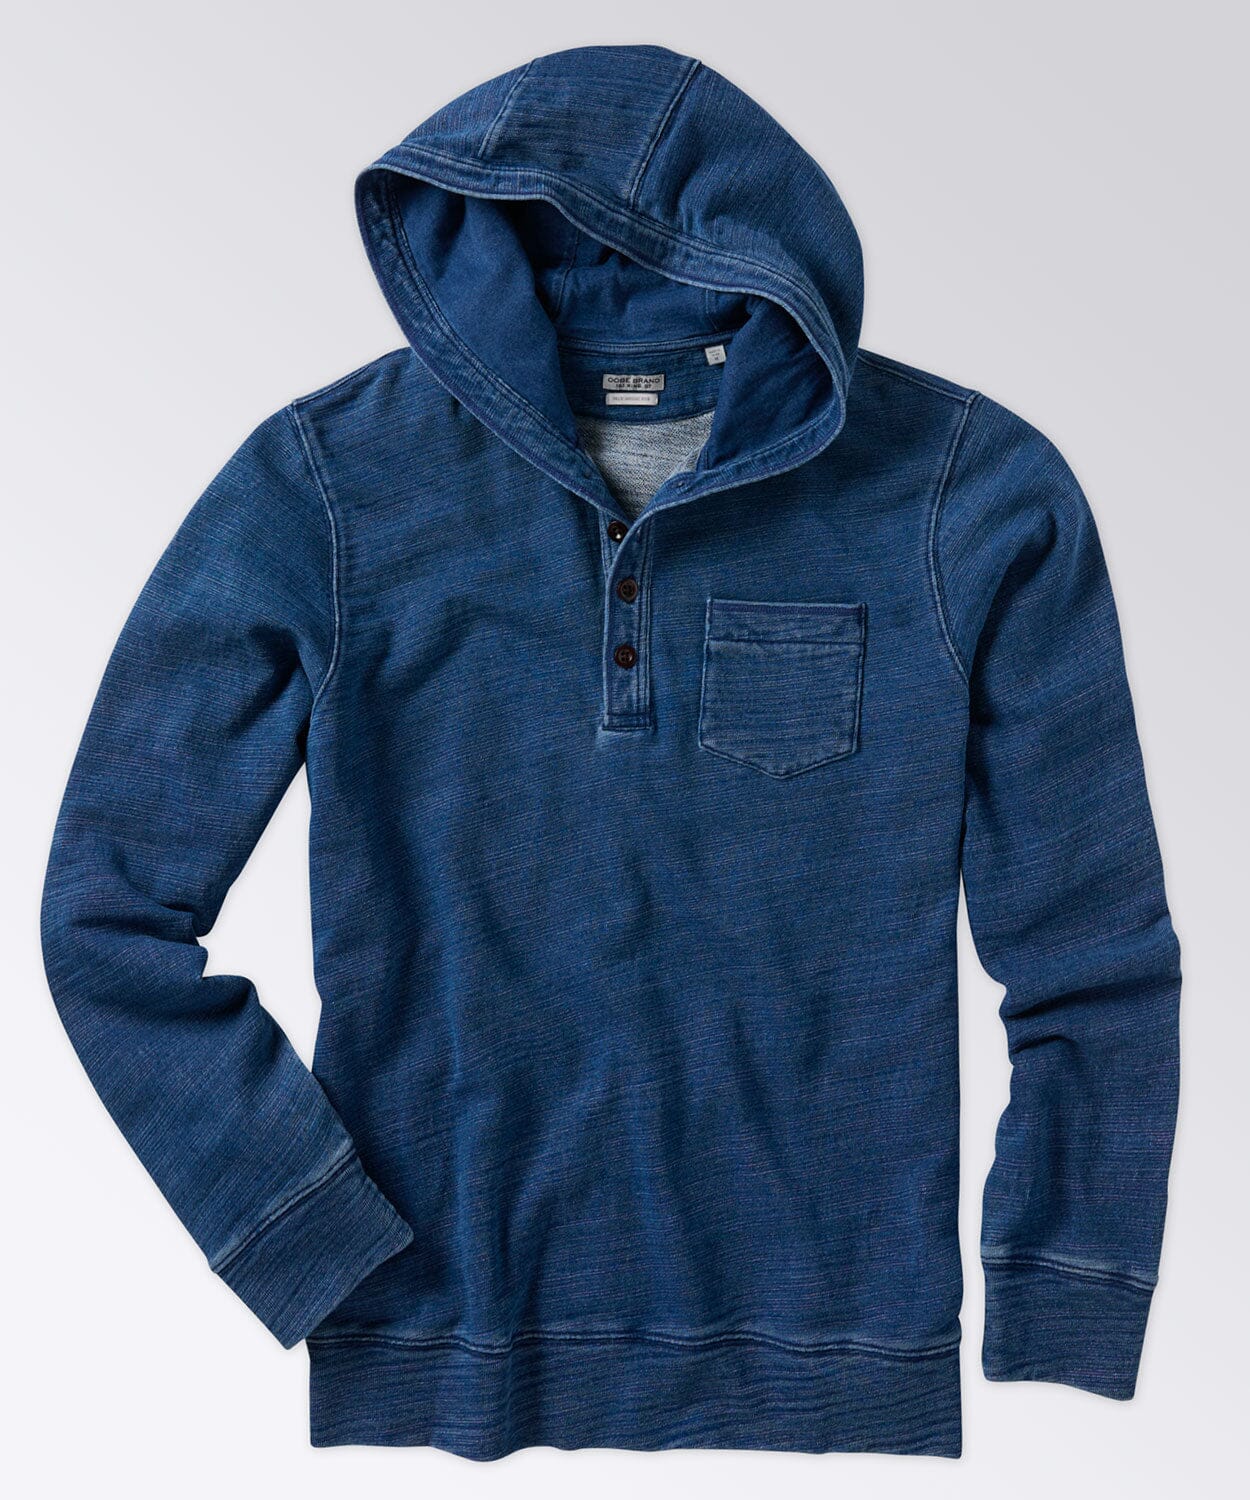 Indigo Blue Collection BRAND Menswear by OOBE | Premium